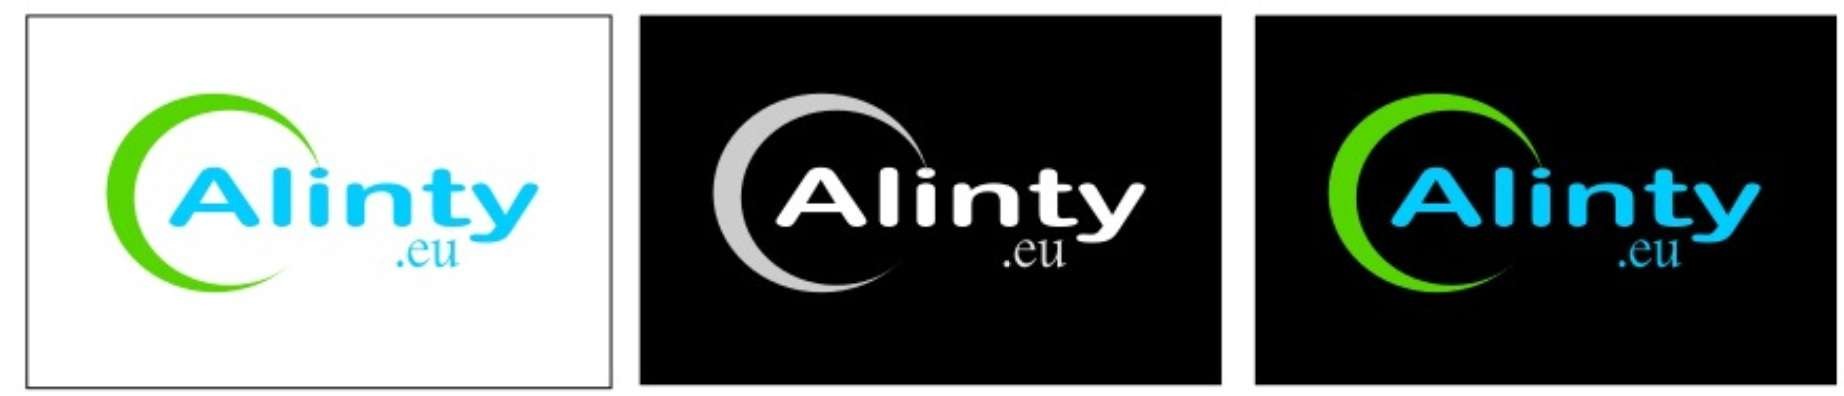 Alinty